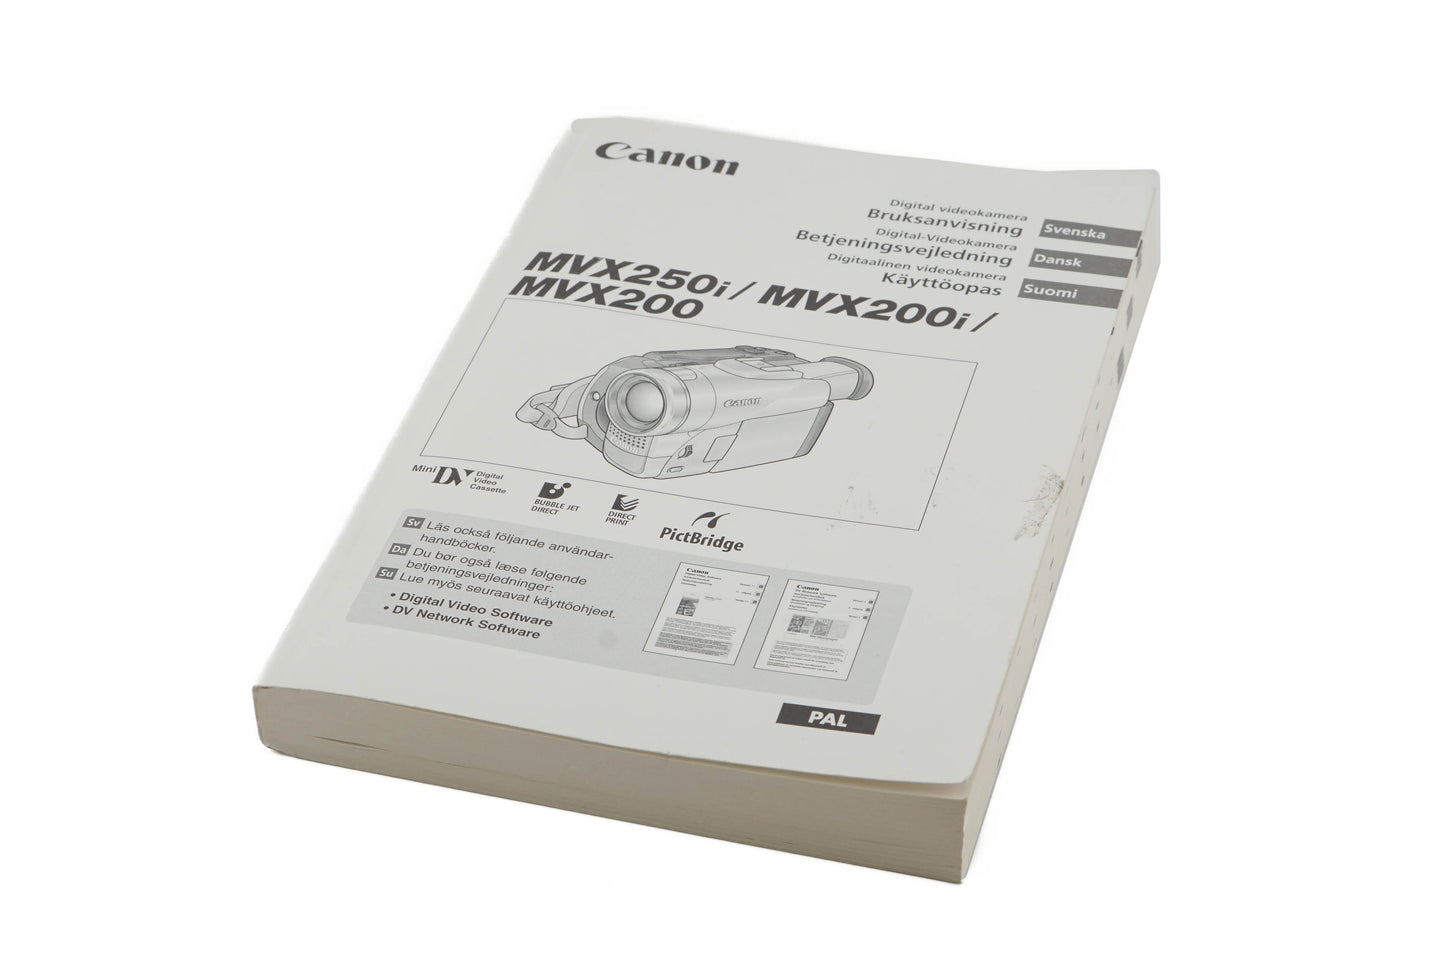 Canon MVX200 / MVX200i / MVX250i Digital Video Camcorder Instructions